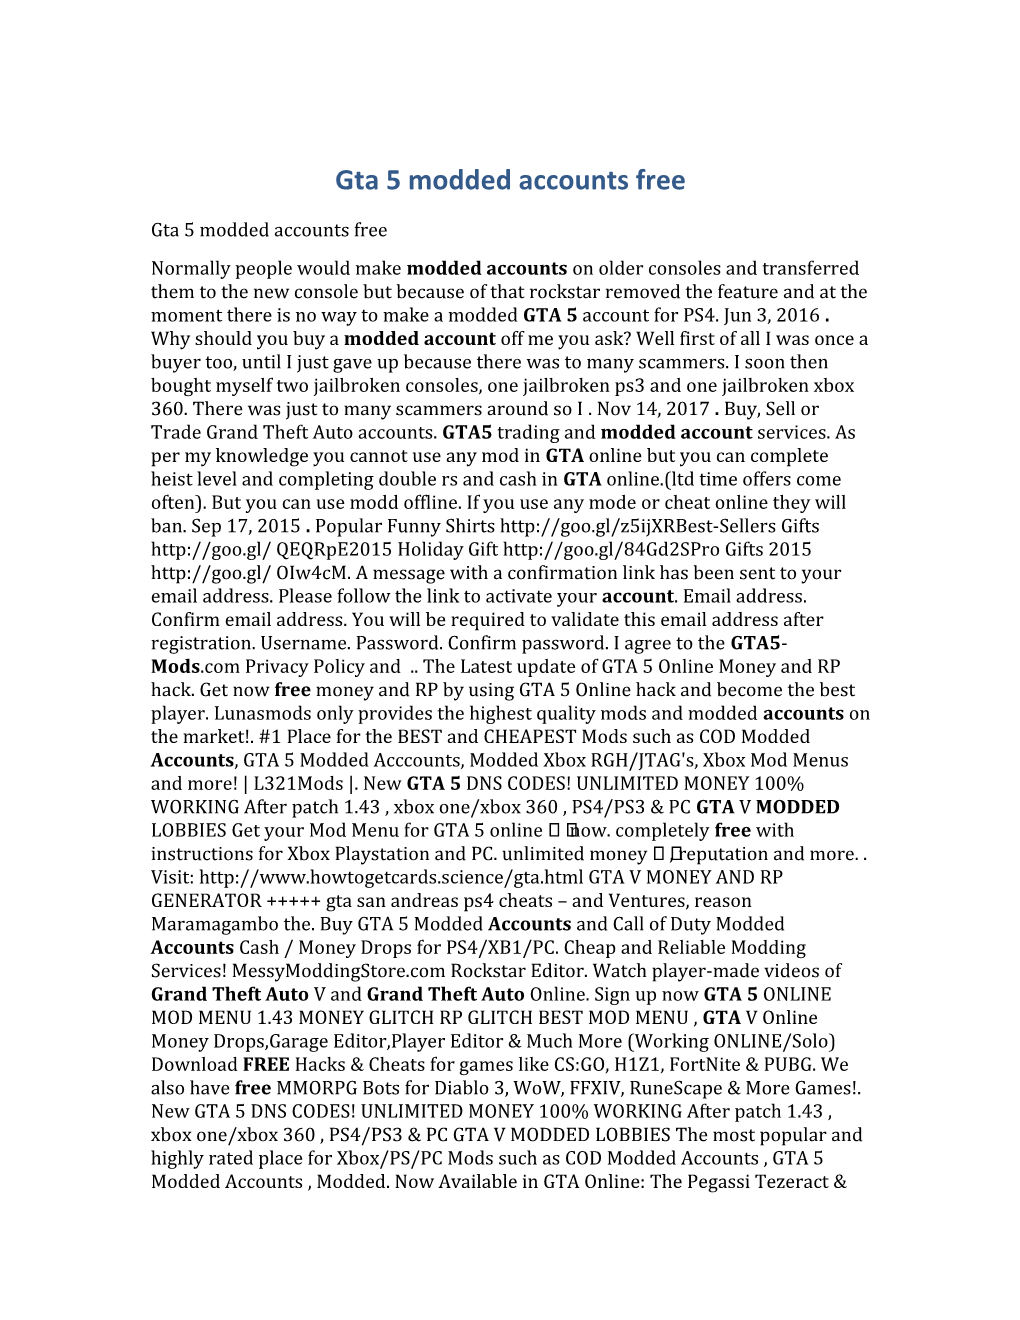 Gta 5 Modded Accounts Free